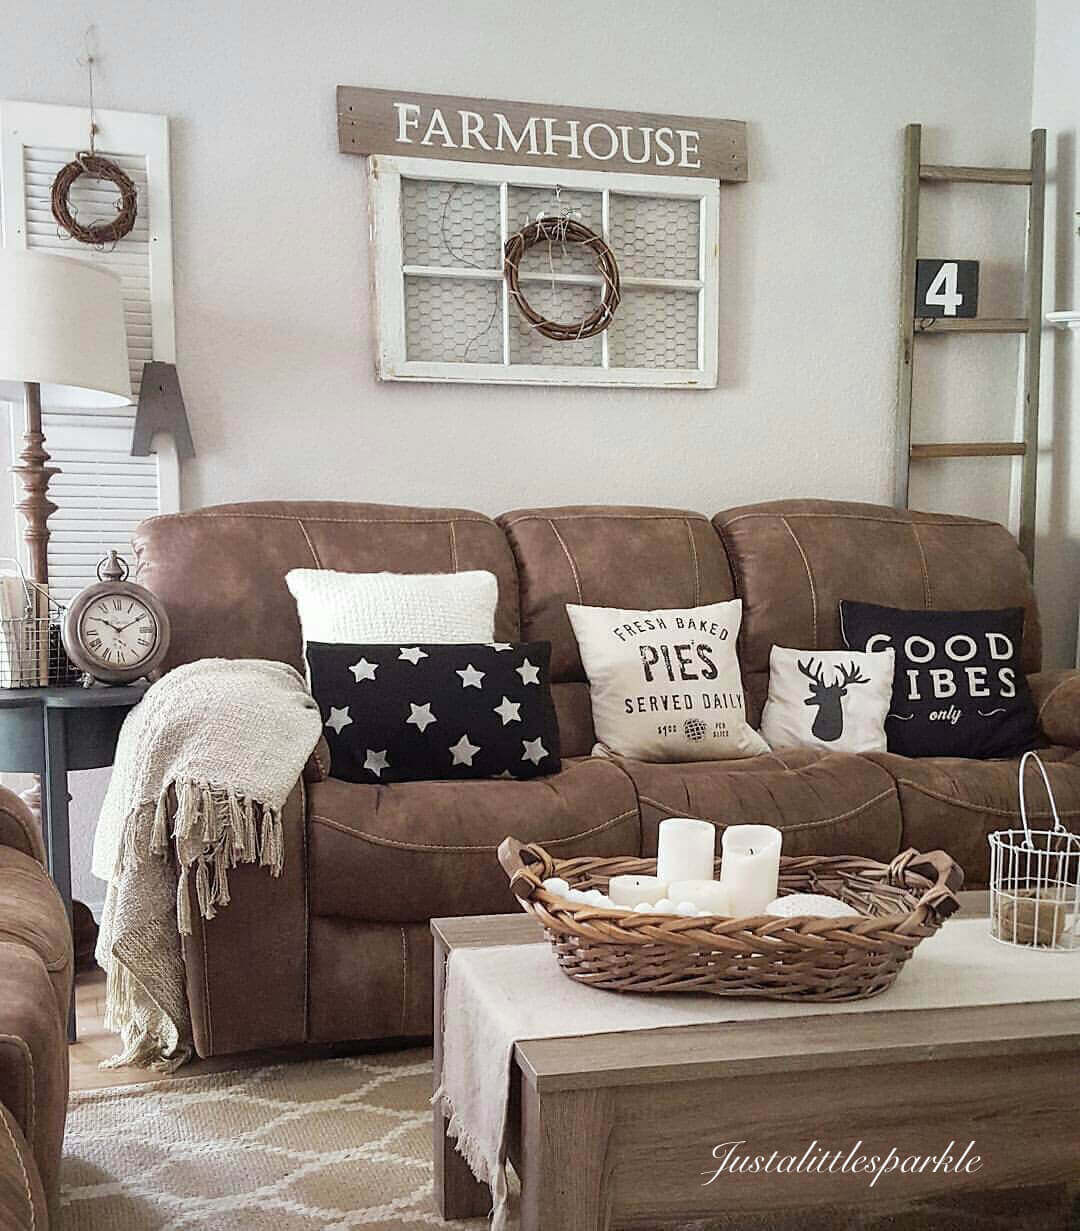 Farmhouse Living Room Ideas on a Budget - Harptimes